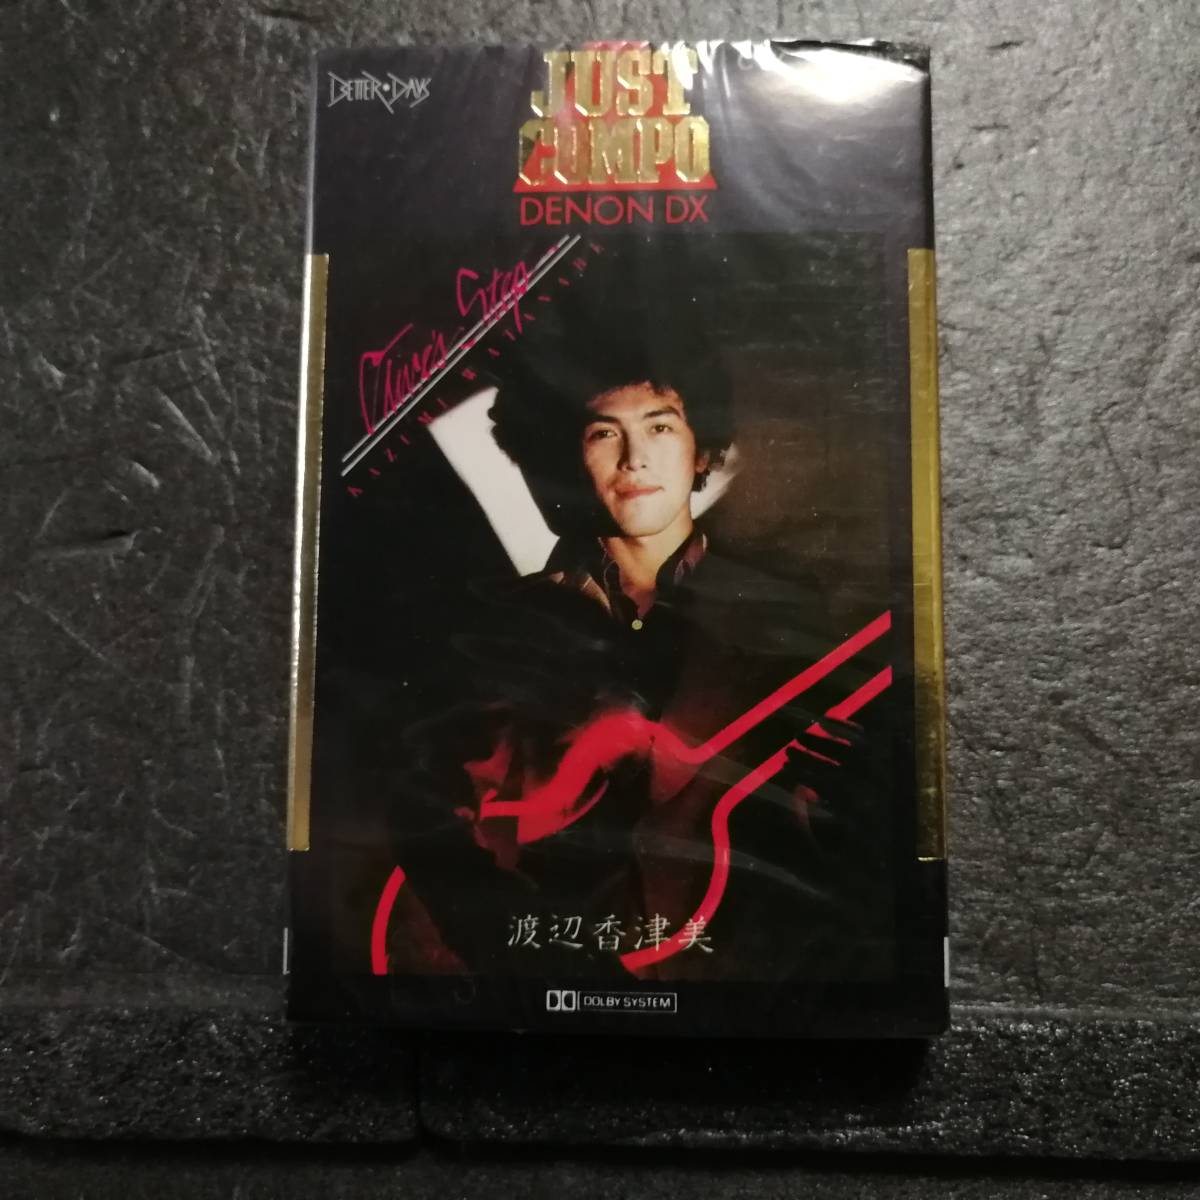  cassette tape Watanabe . Tsu beautiful Olive\'s Stepo Lee vus* step JUST COMPO Sakamoto Ryuichi CTK-7011